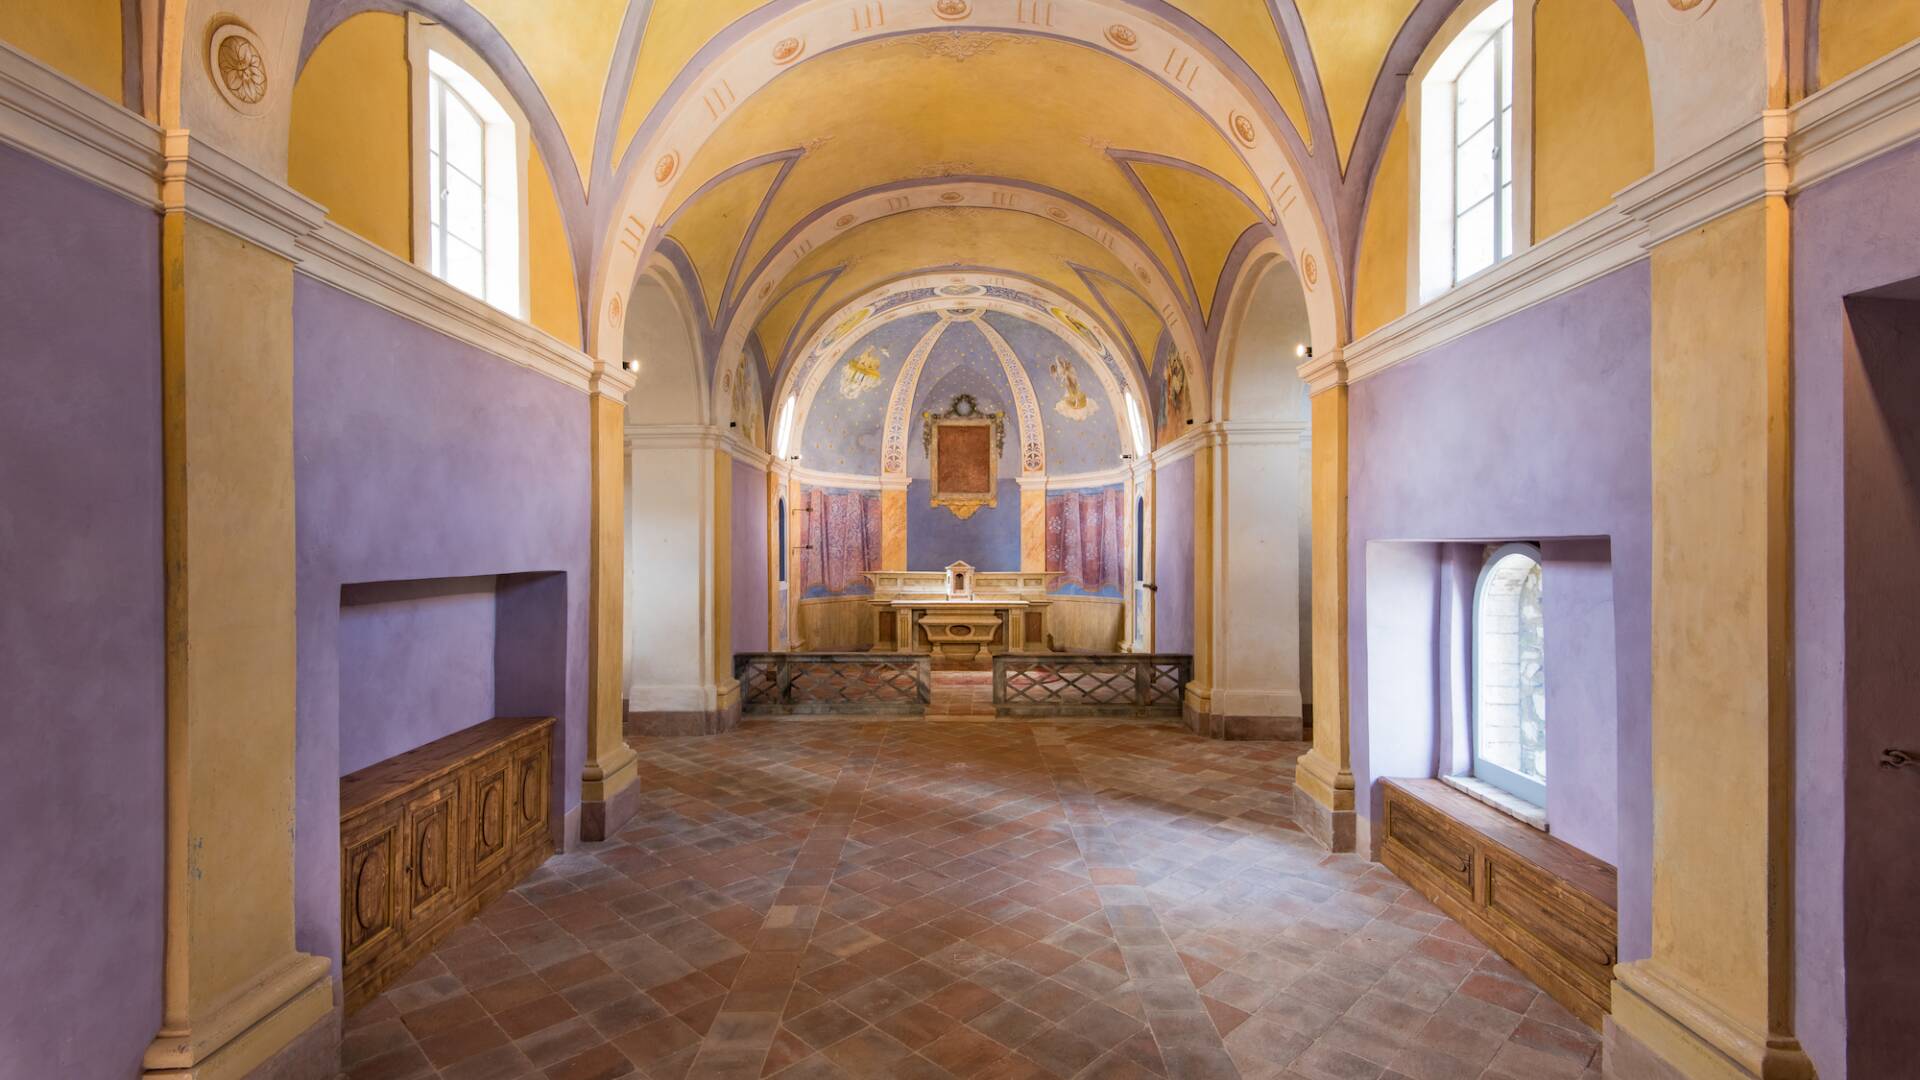 XI century church interior